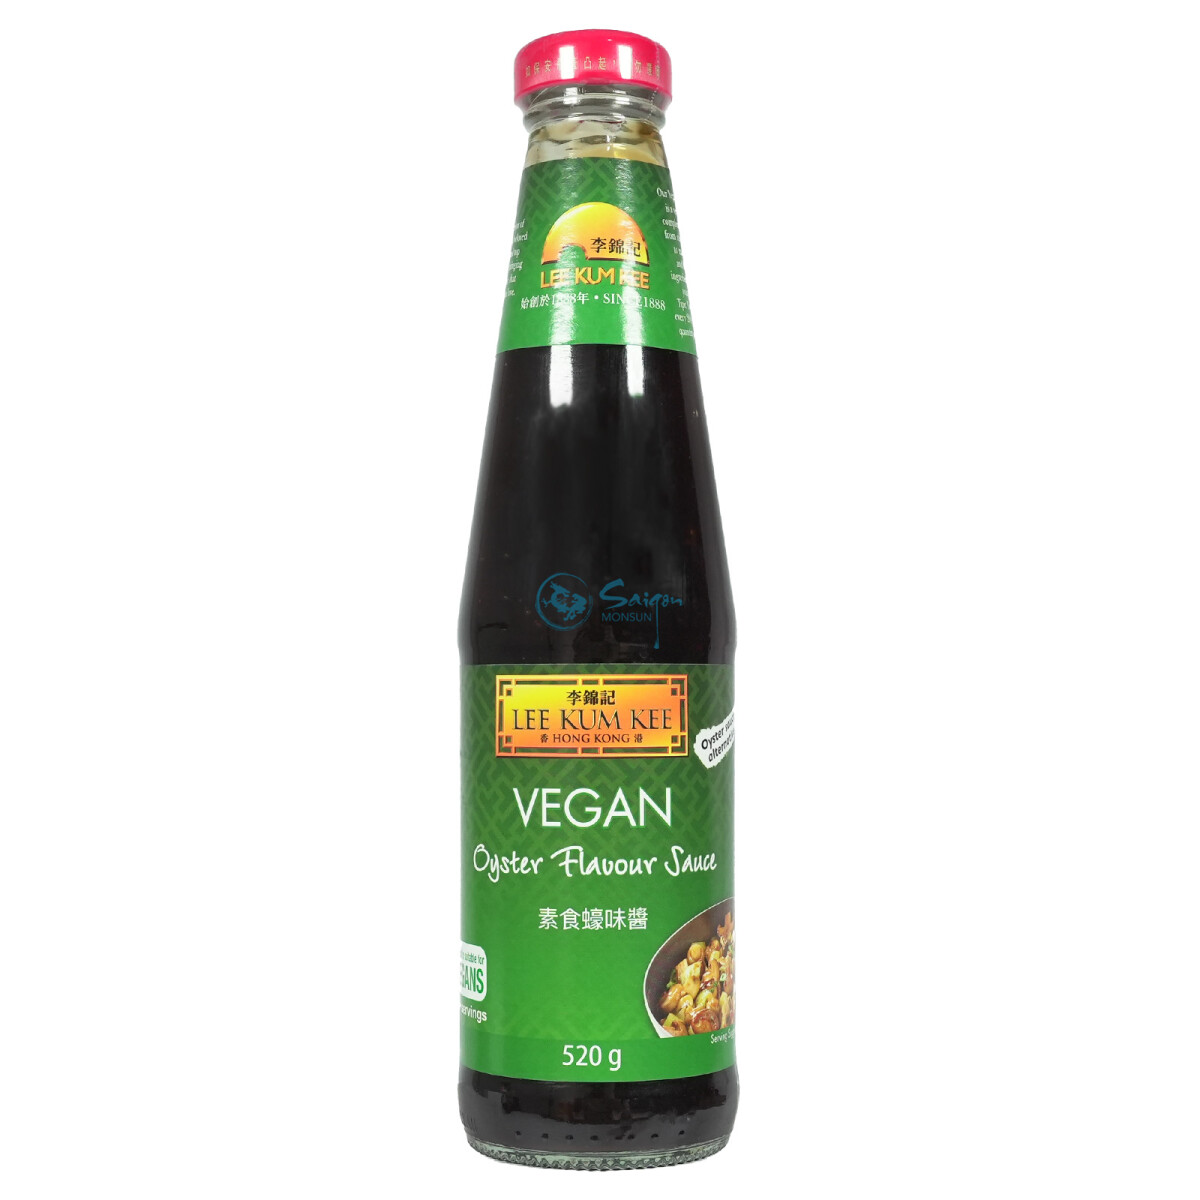 Lee Kum Kee Vegan Oyster Flavour Sauce 520g